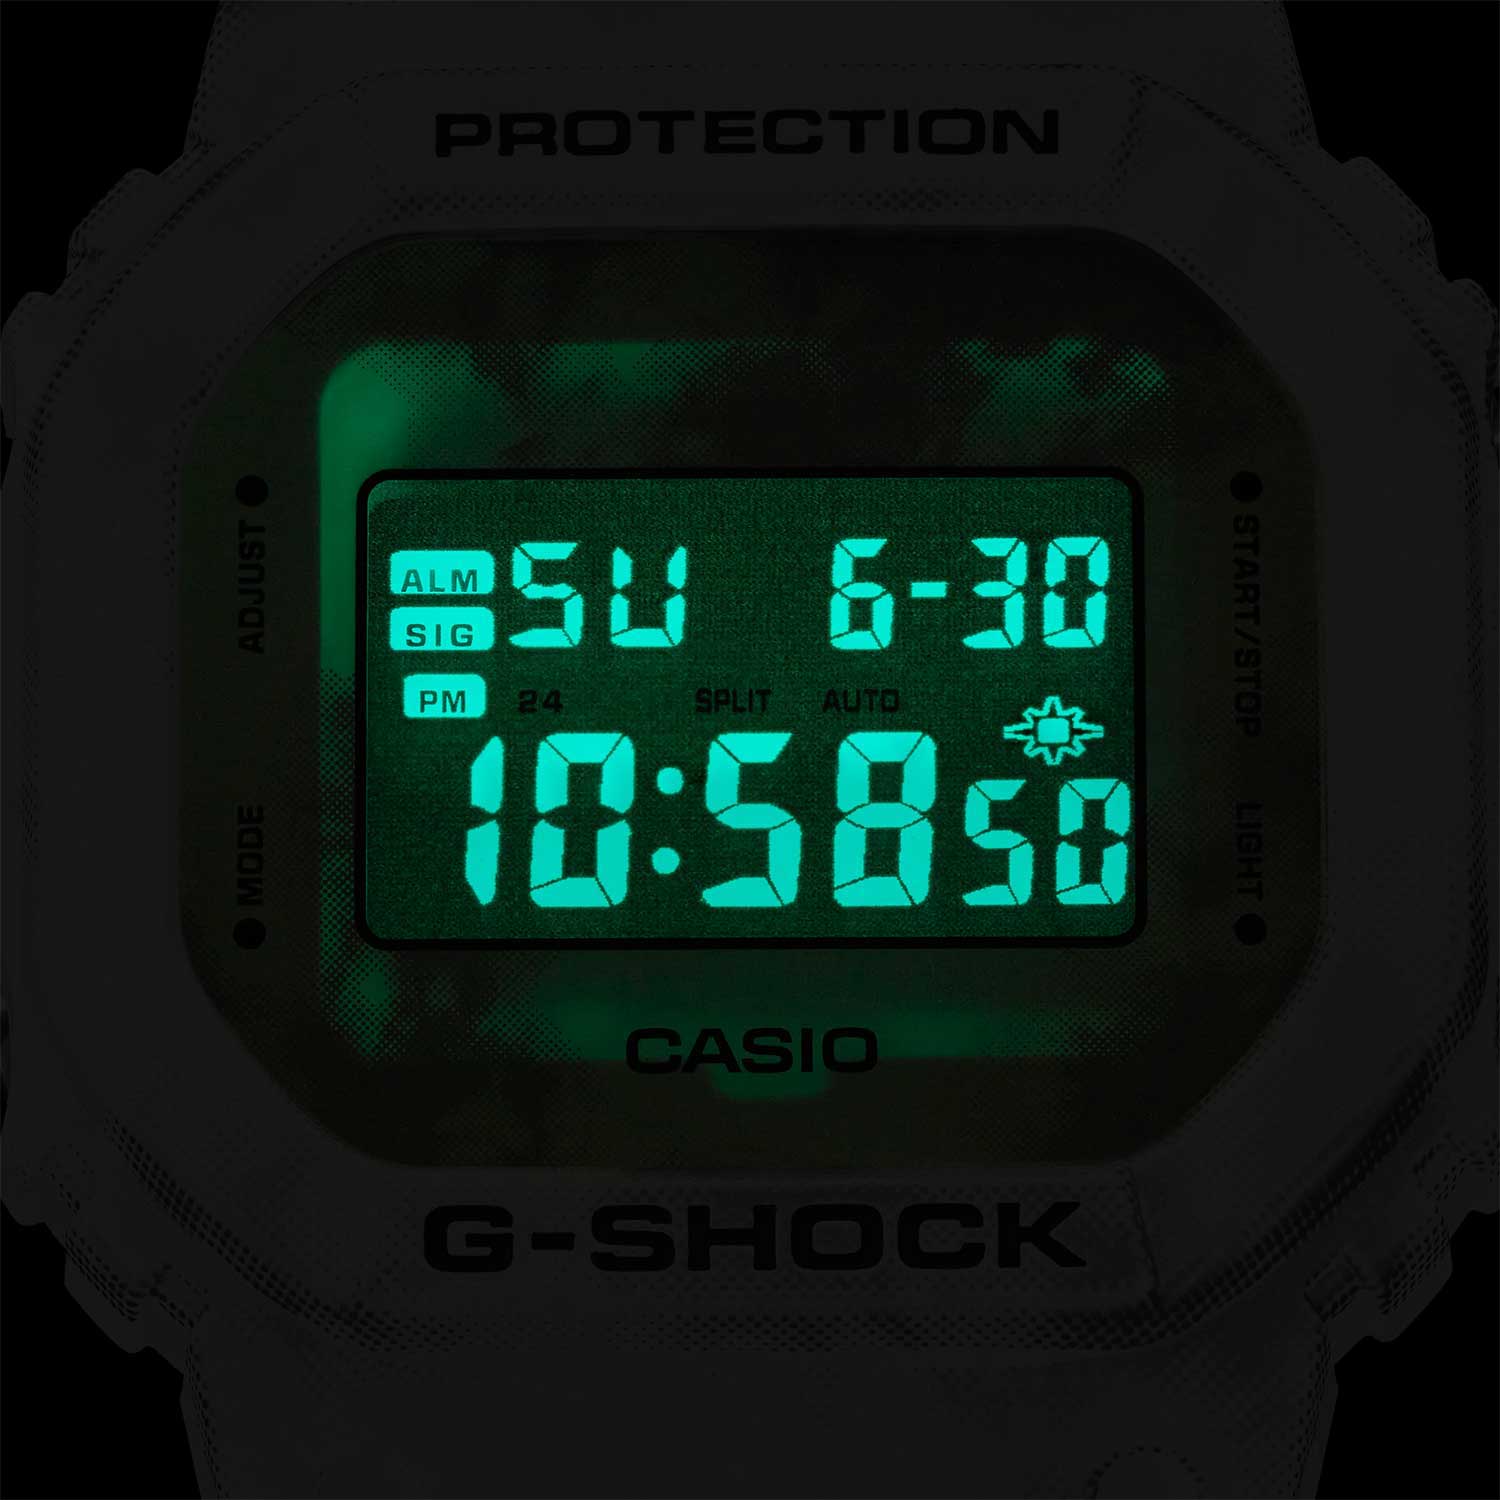 Мужские часы CASIO G-SHOCK DW-5600GC-7ER